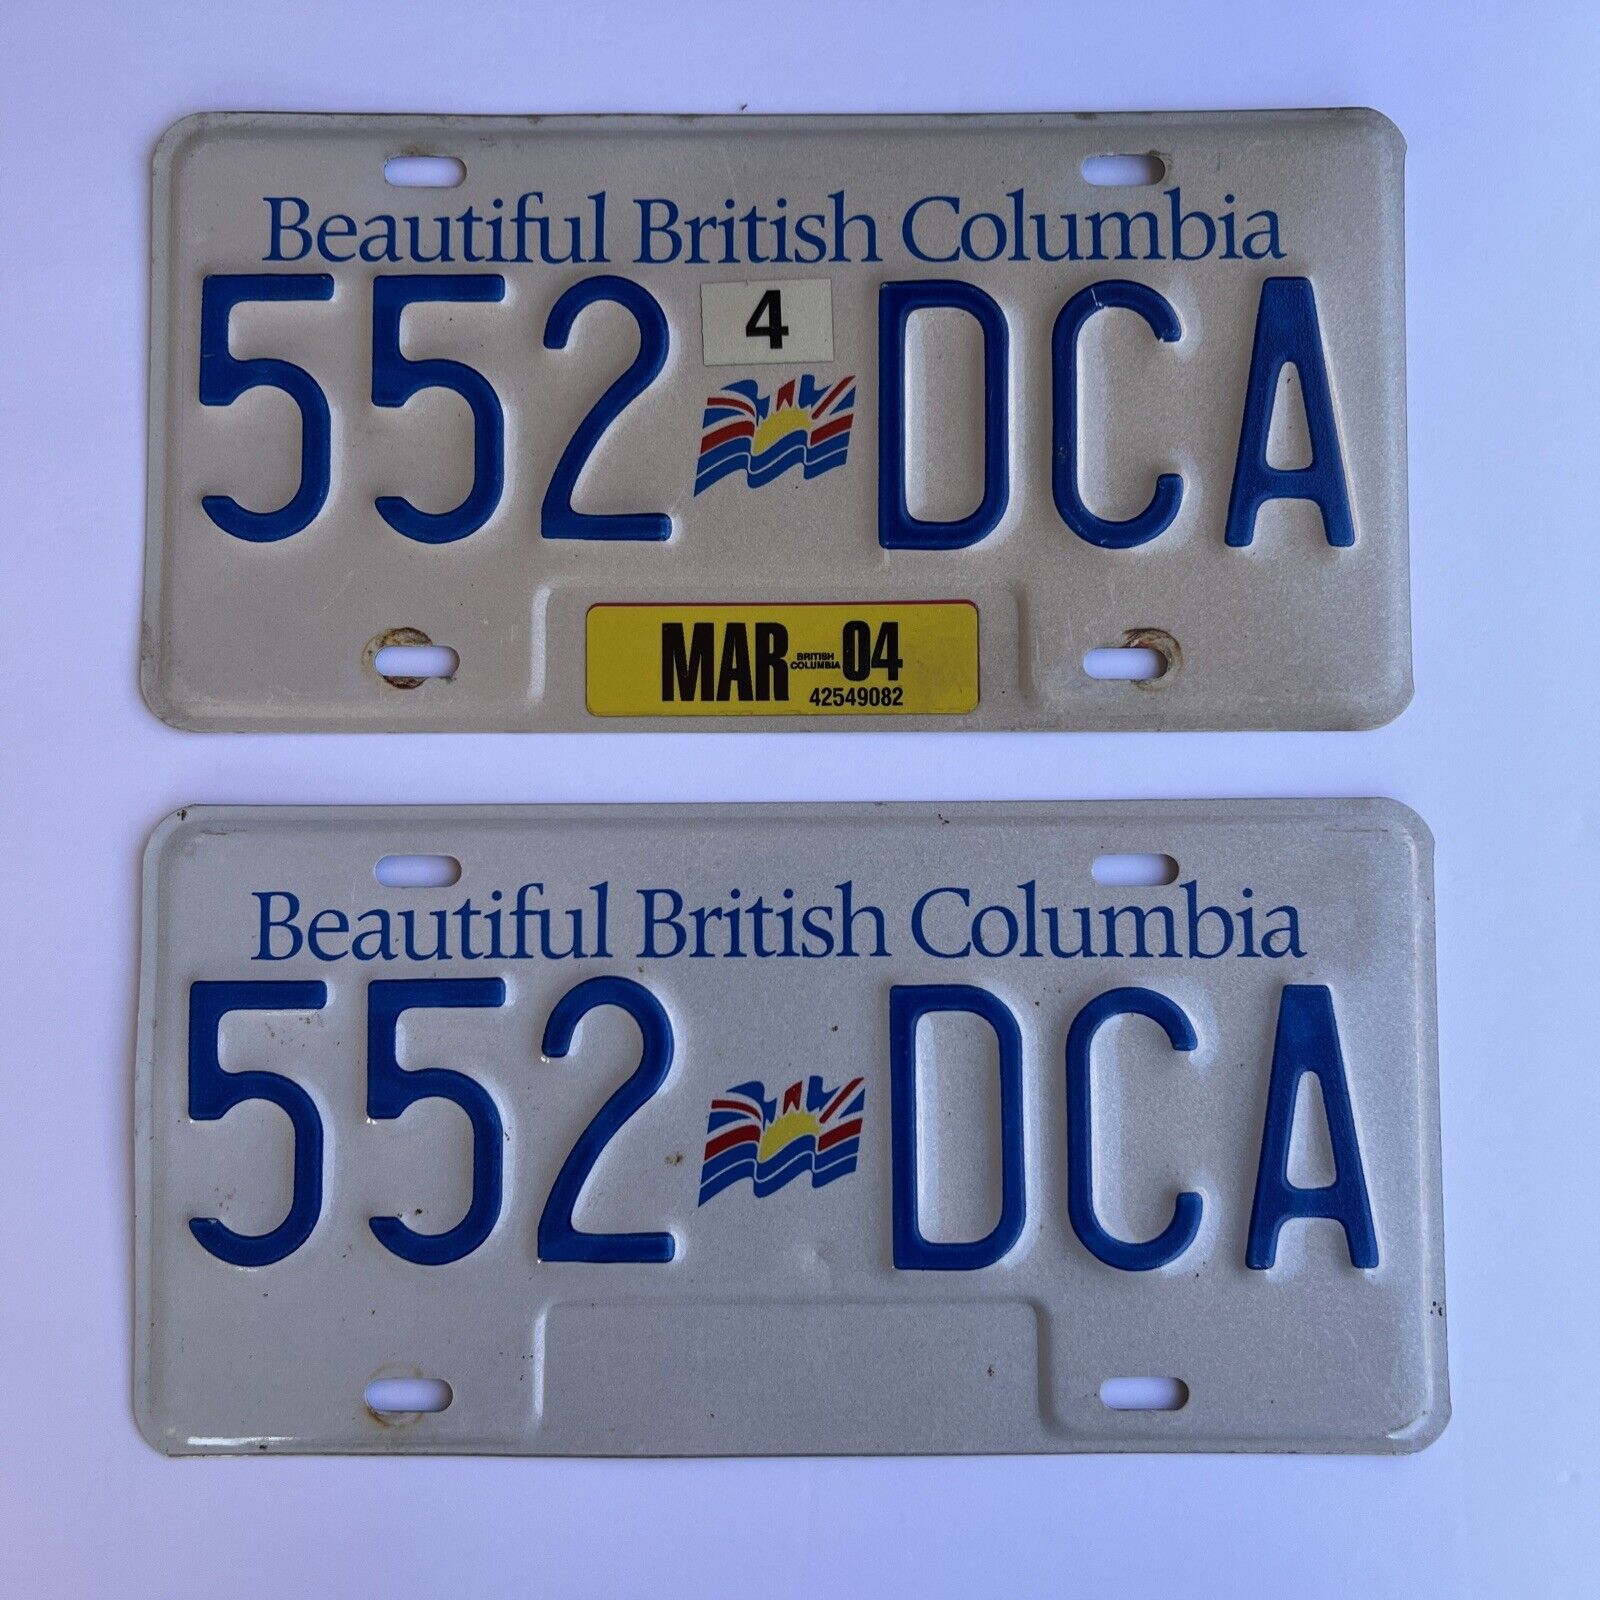 License Plates Pair Beautiful British Columbia 552 DCA